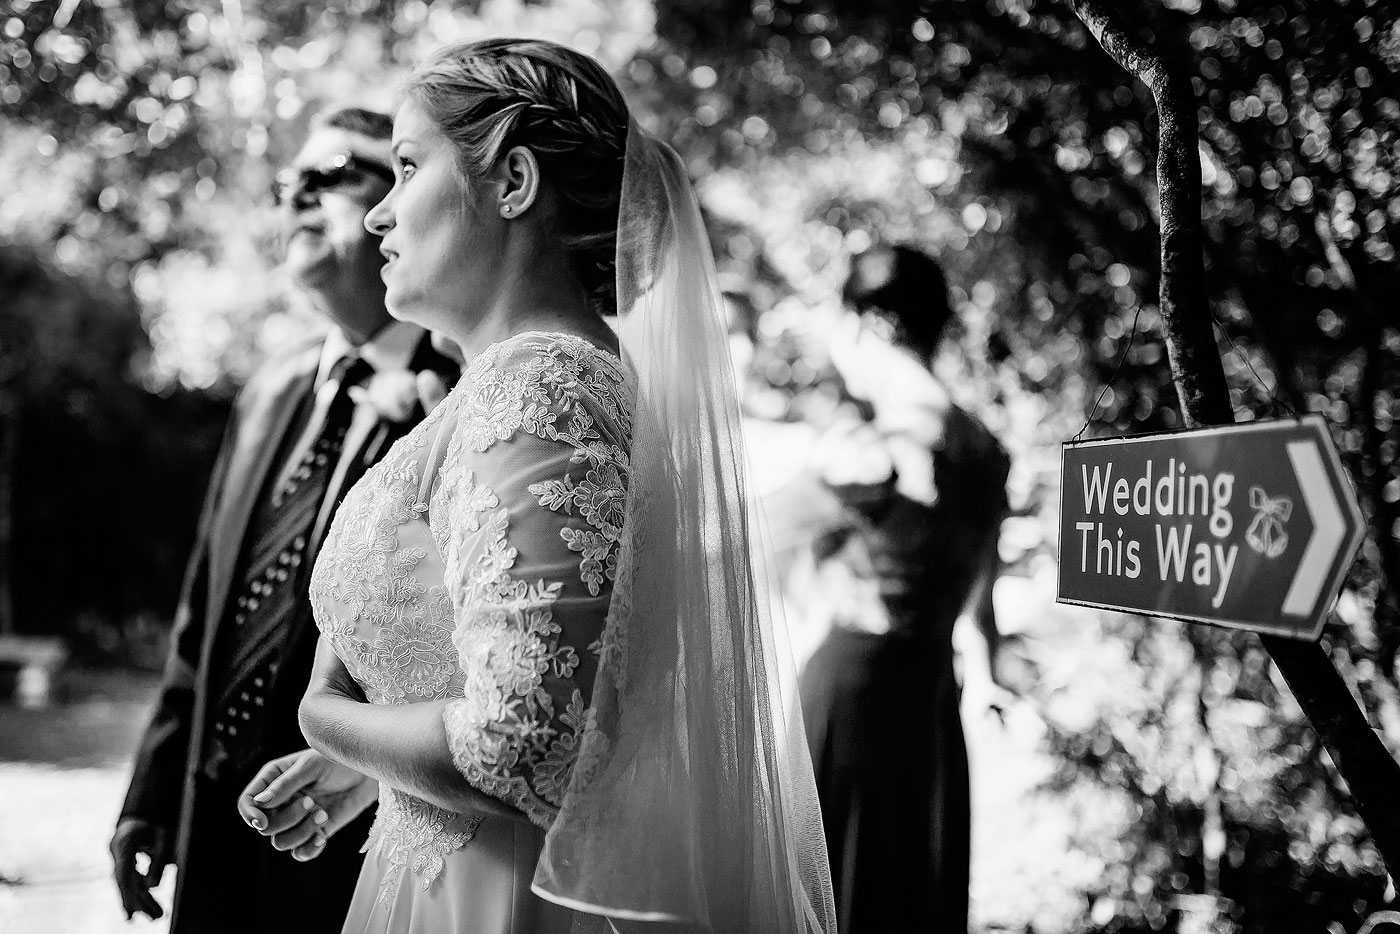 Nervous Bride before the wedding ceremony